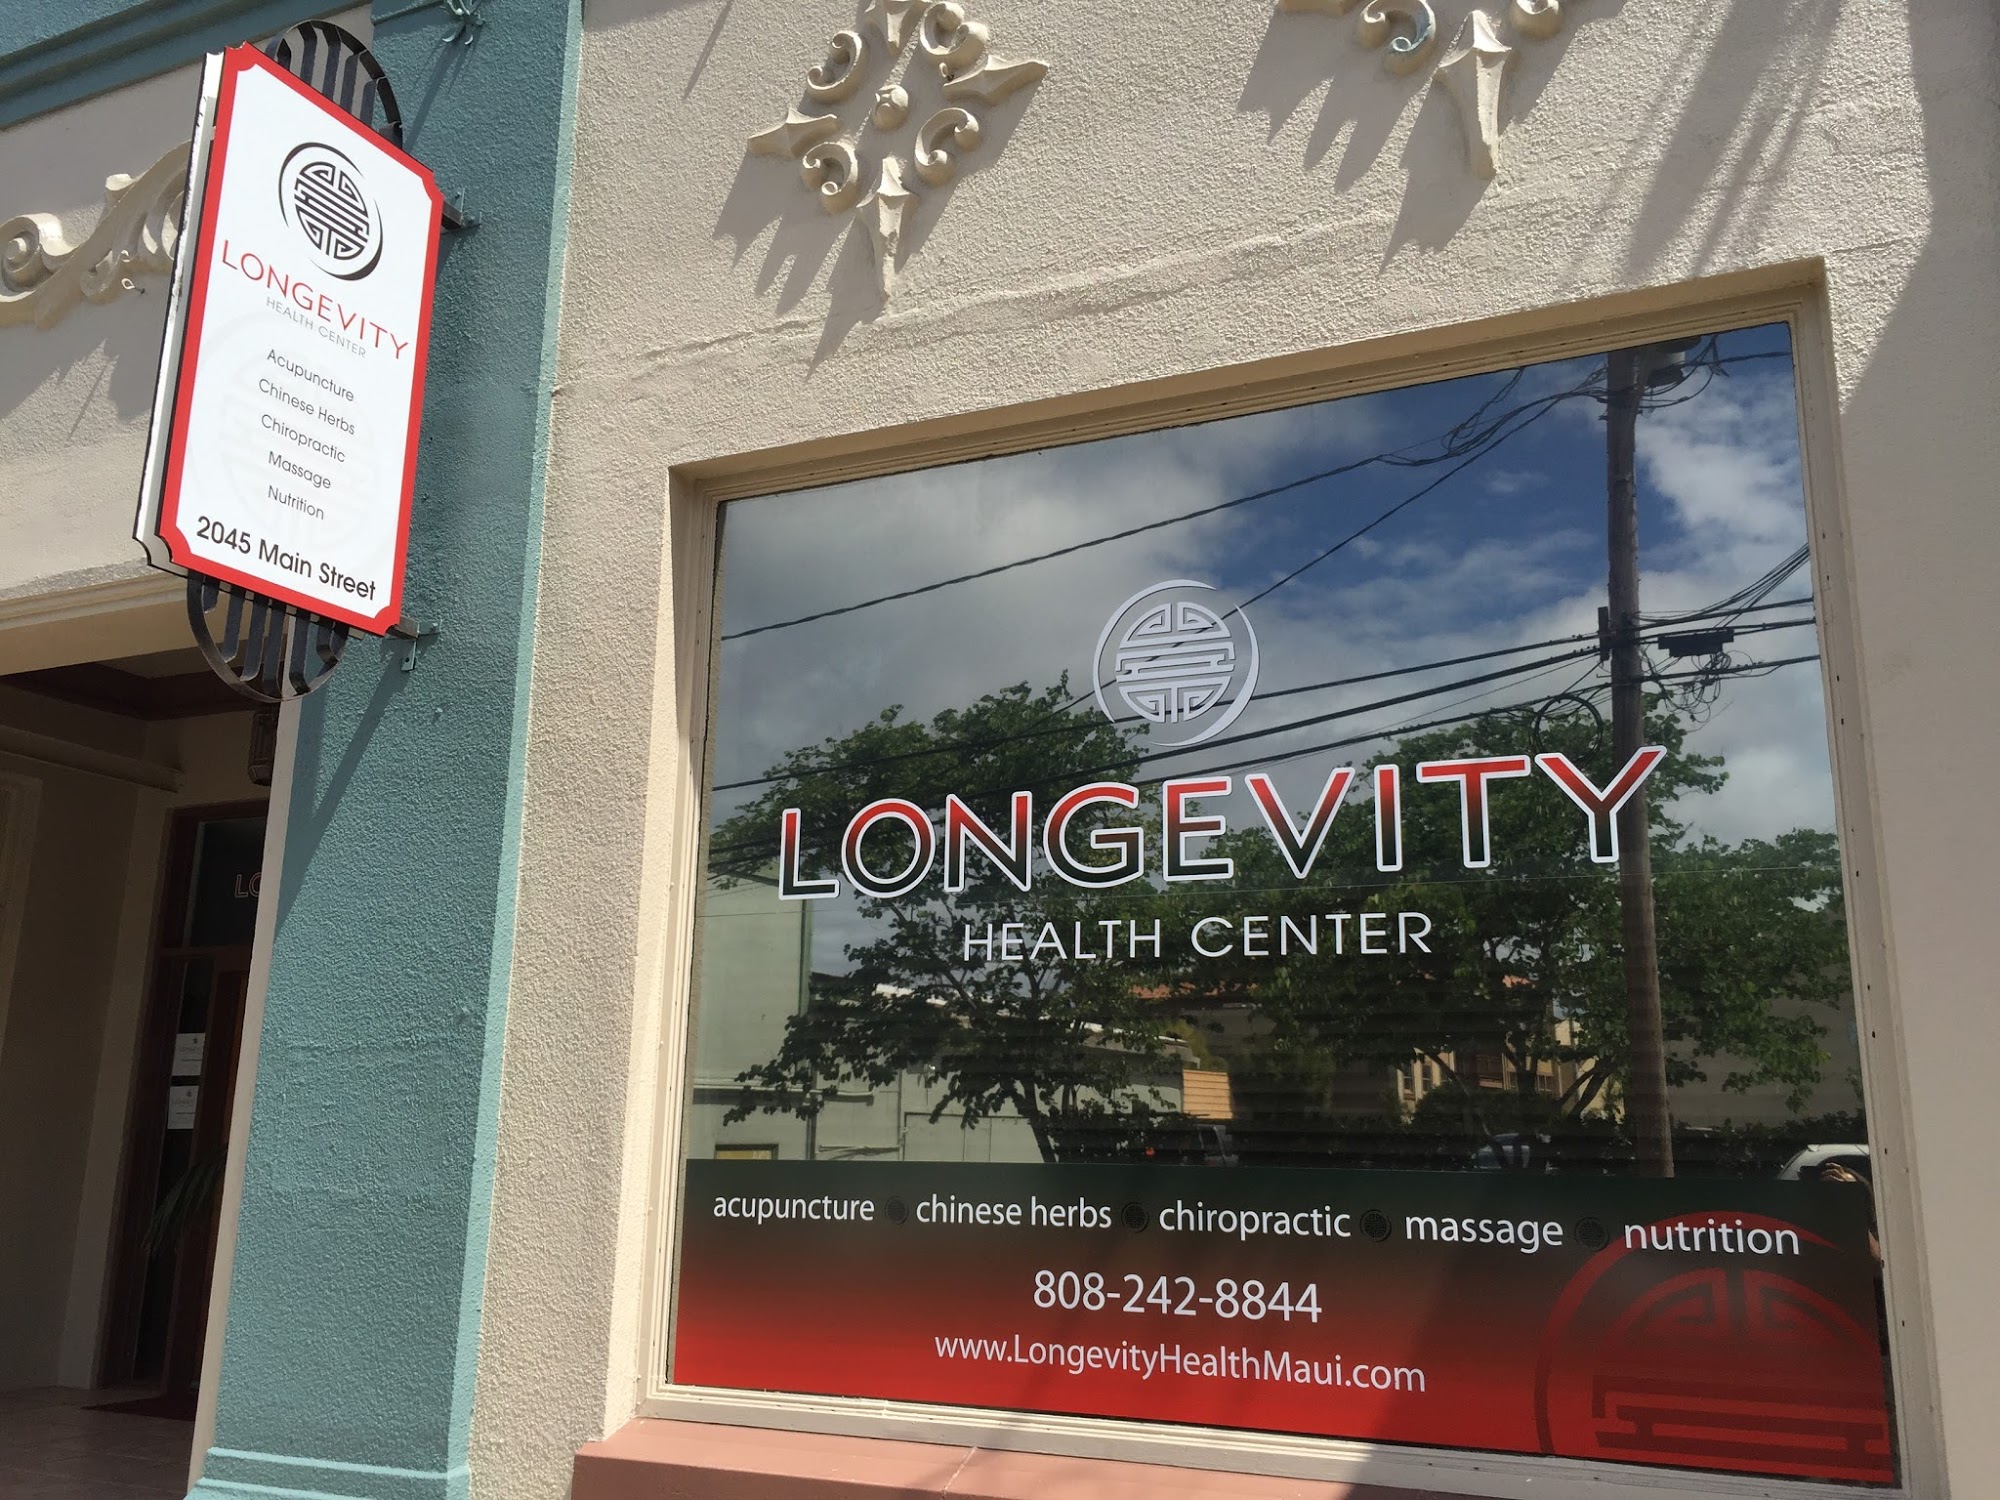 Longevity Health Center